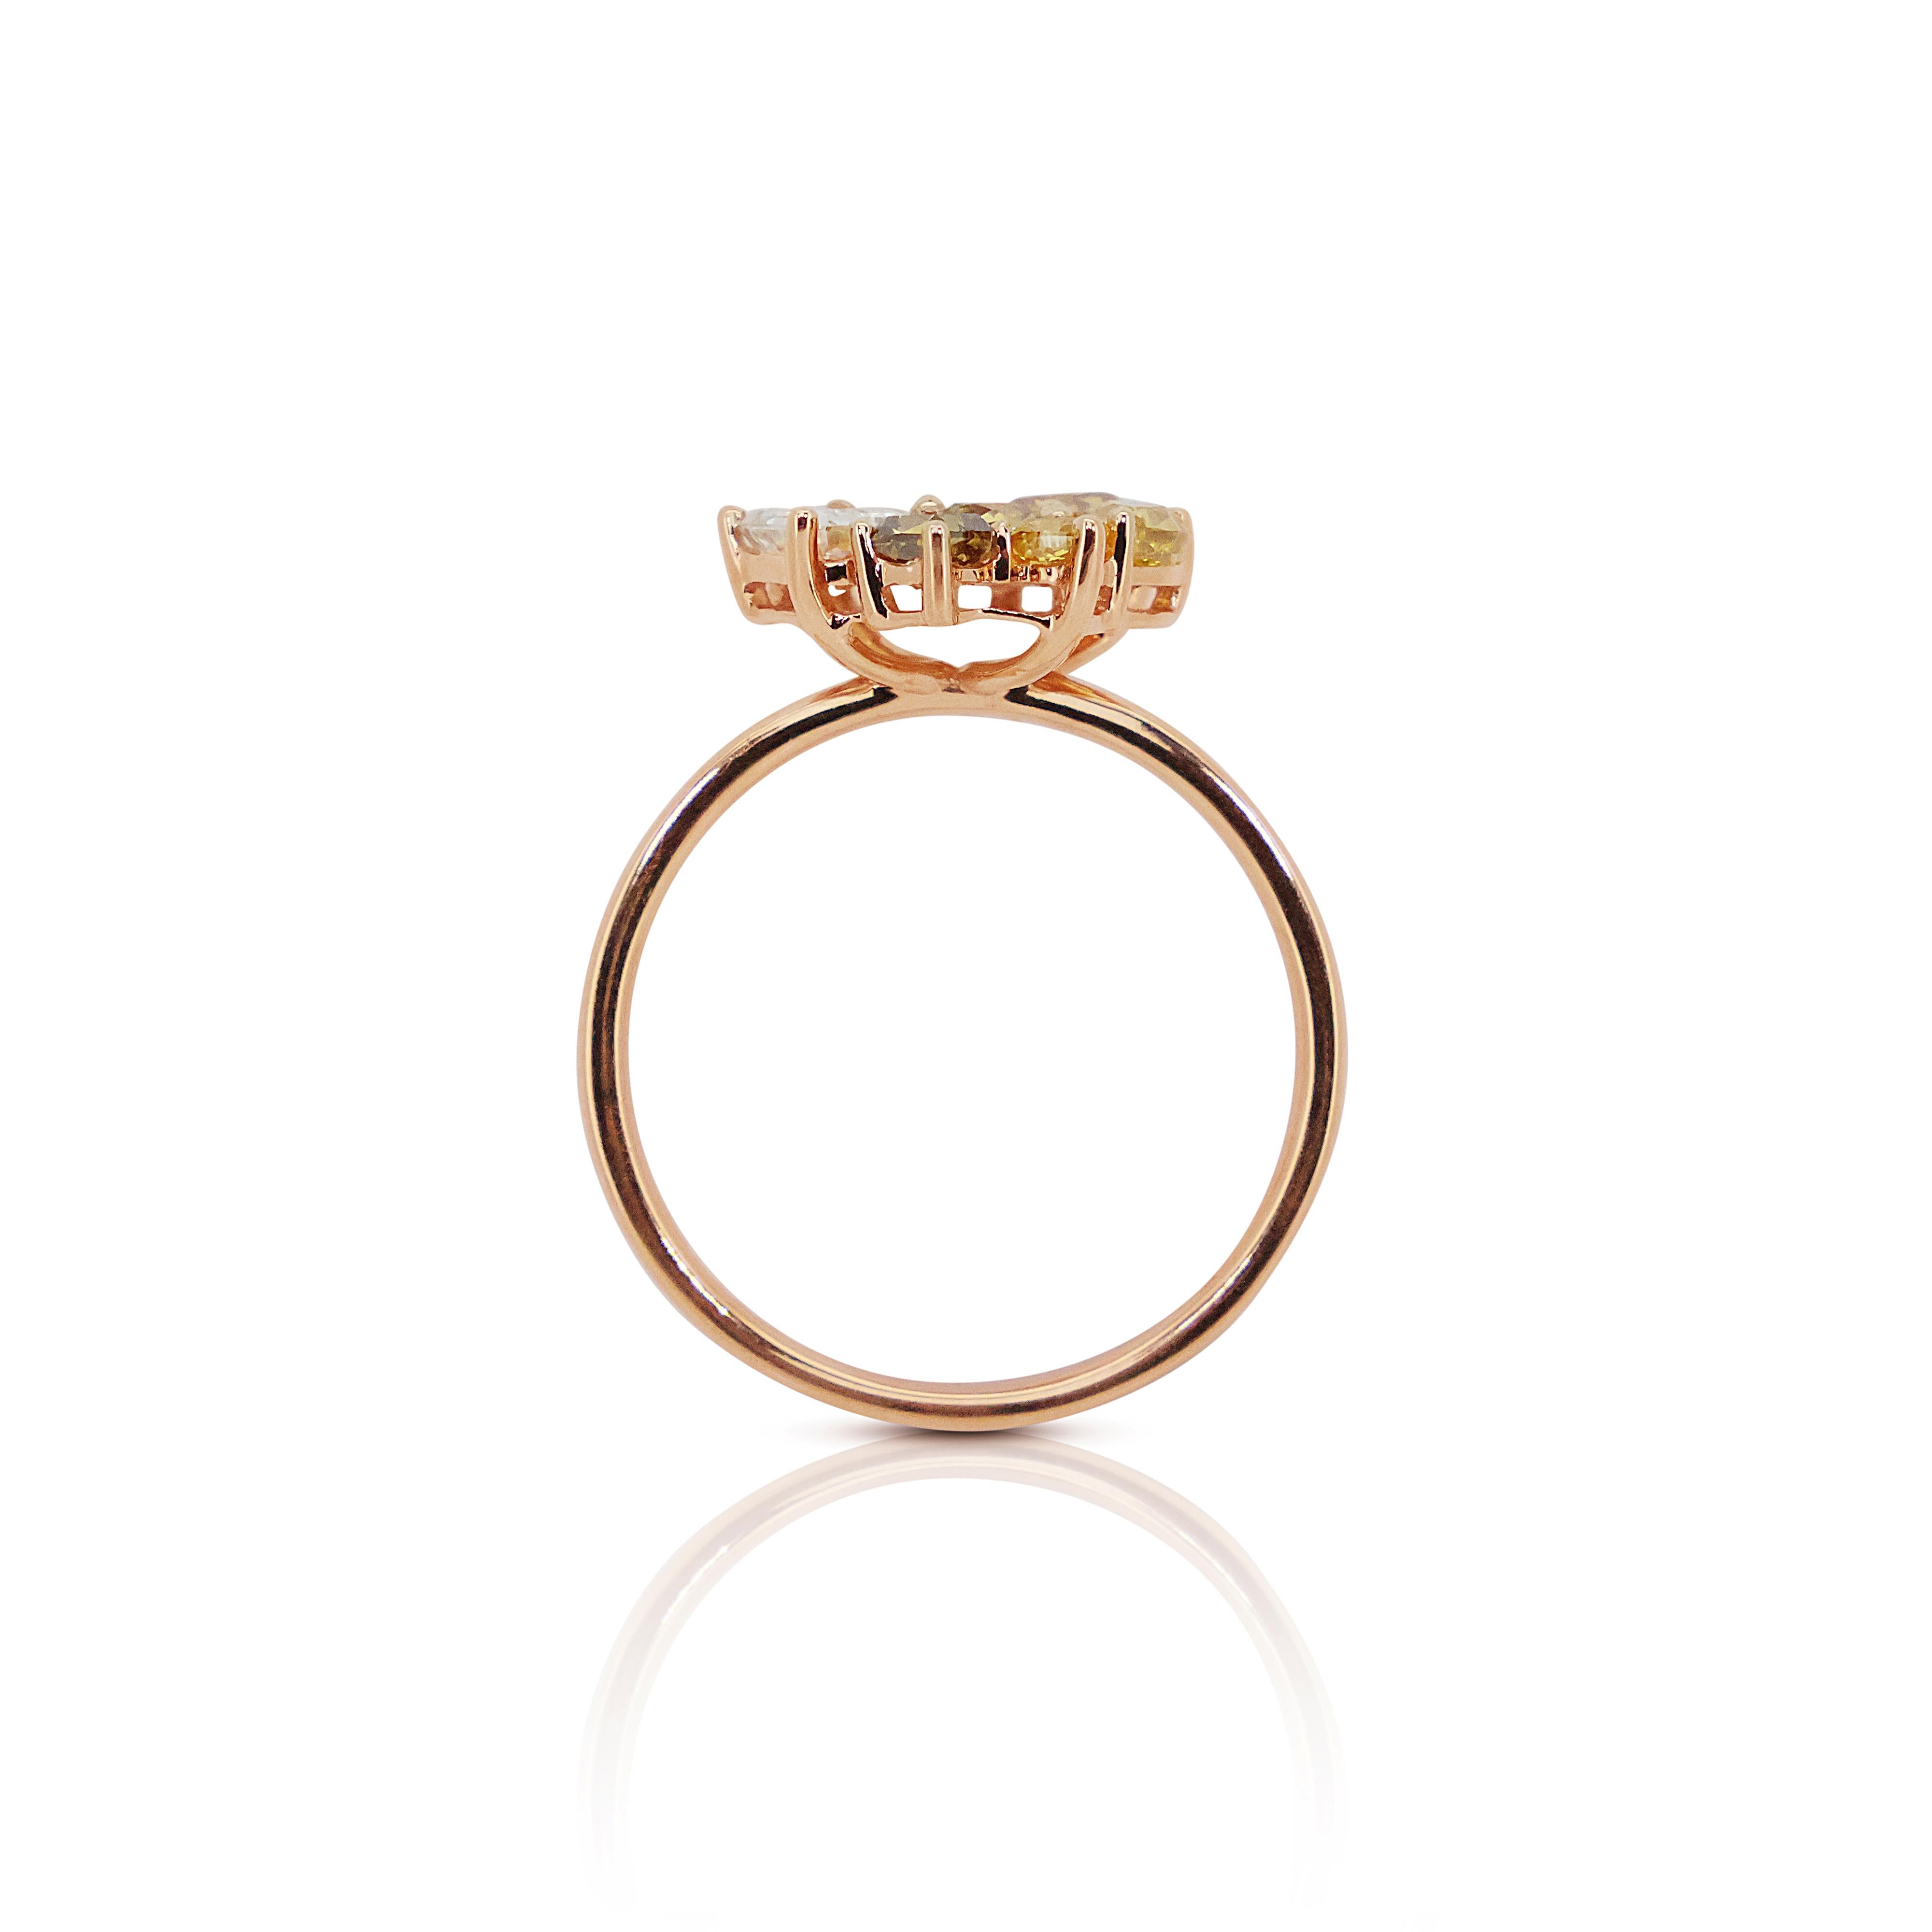 Elegant 18K Rose Gold Coloured Ring with 1.26 Ct Natural Diamonds, NGI Cert 6